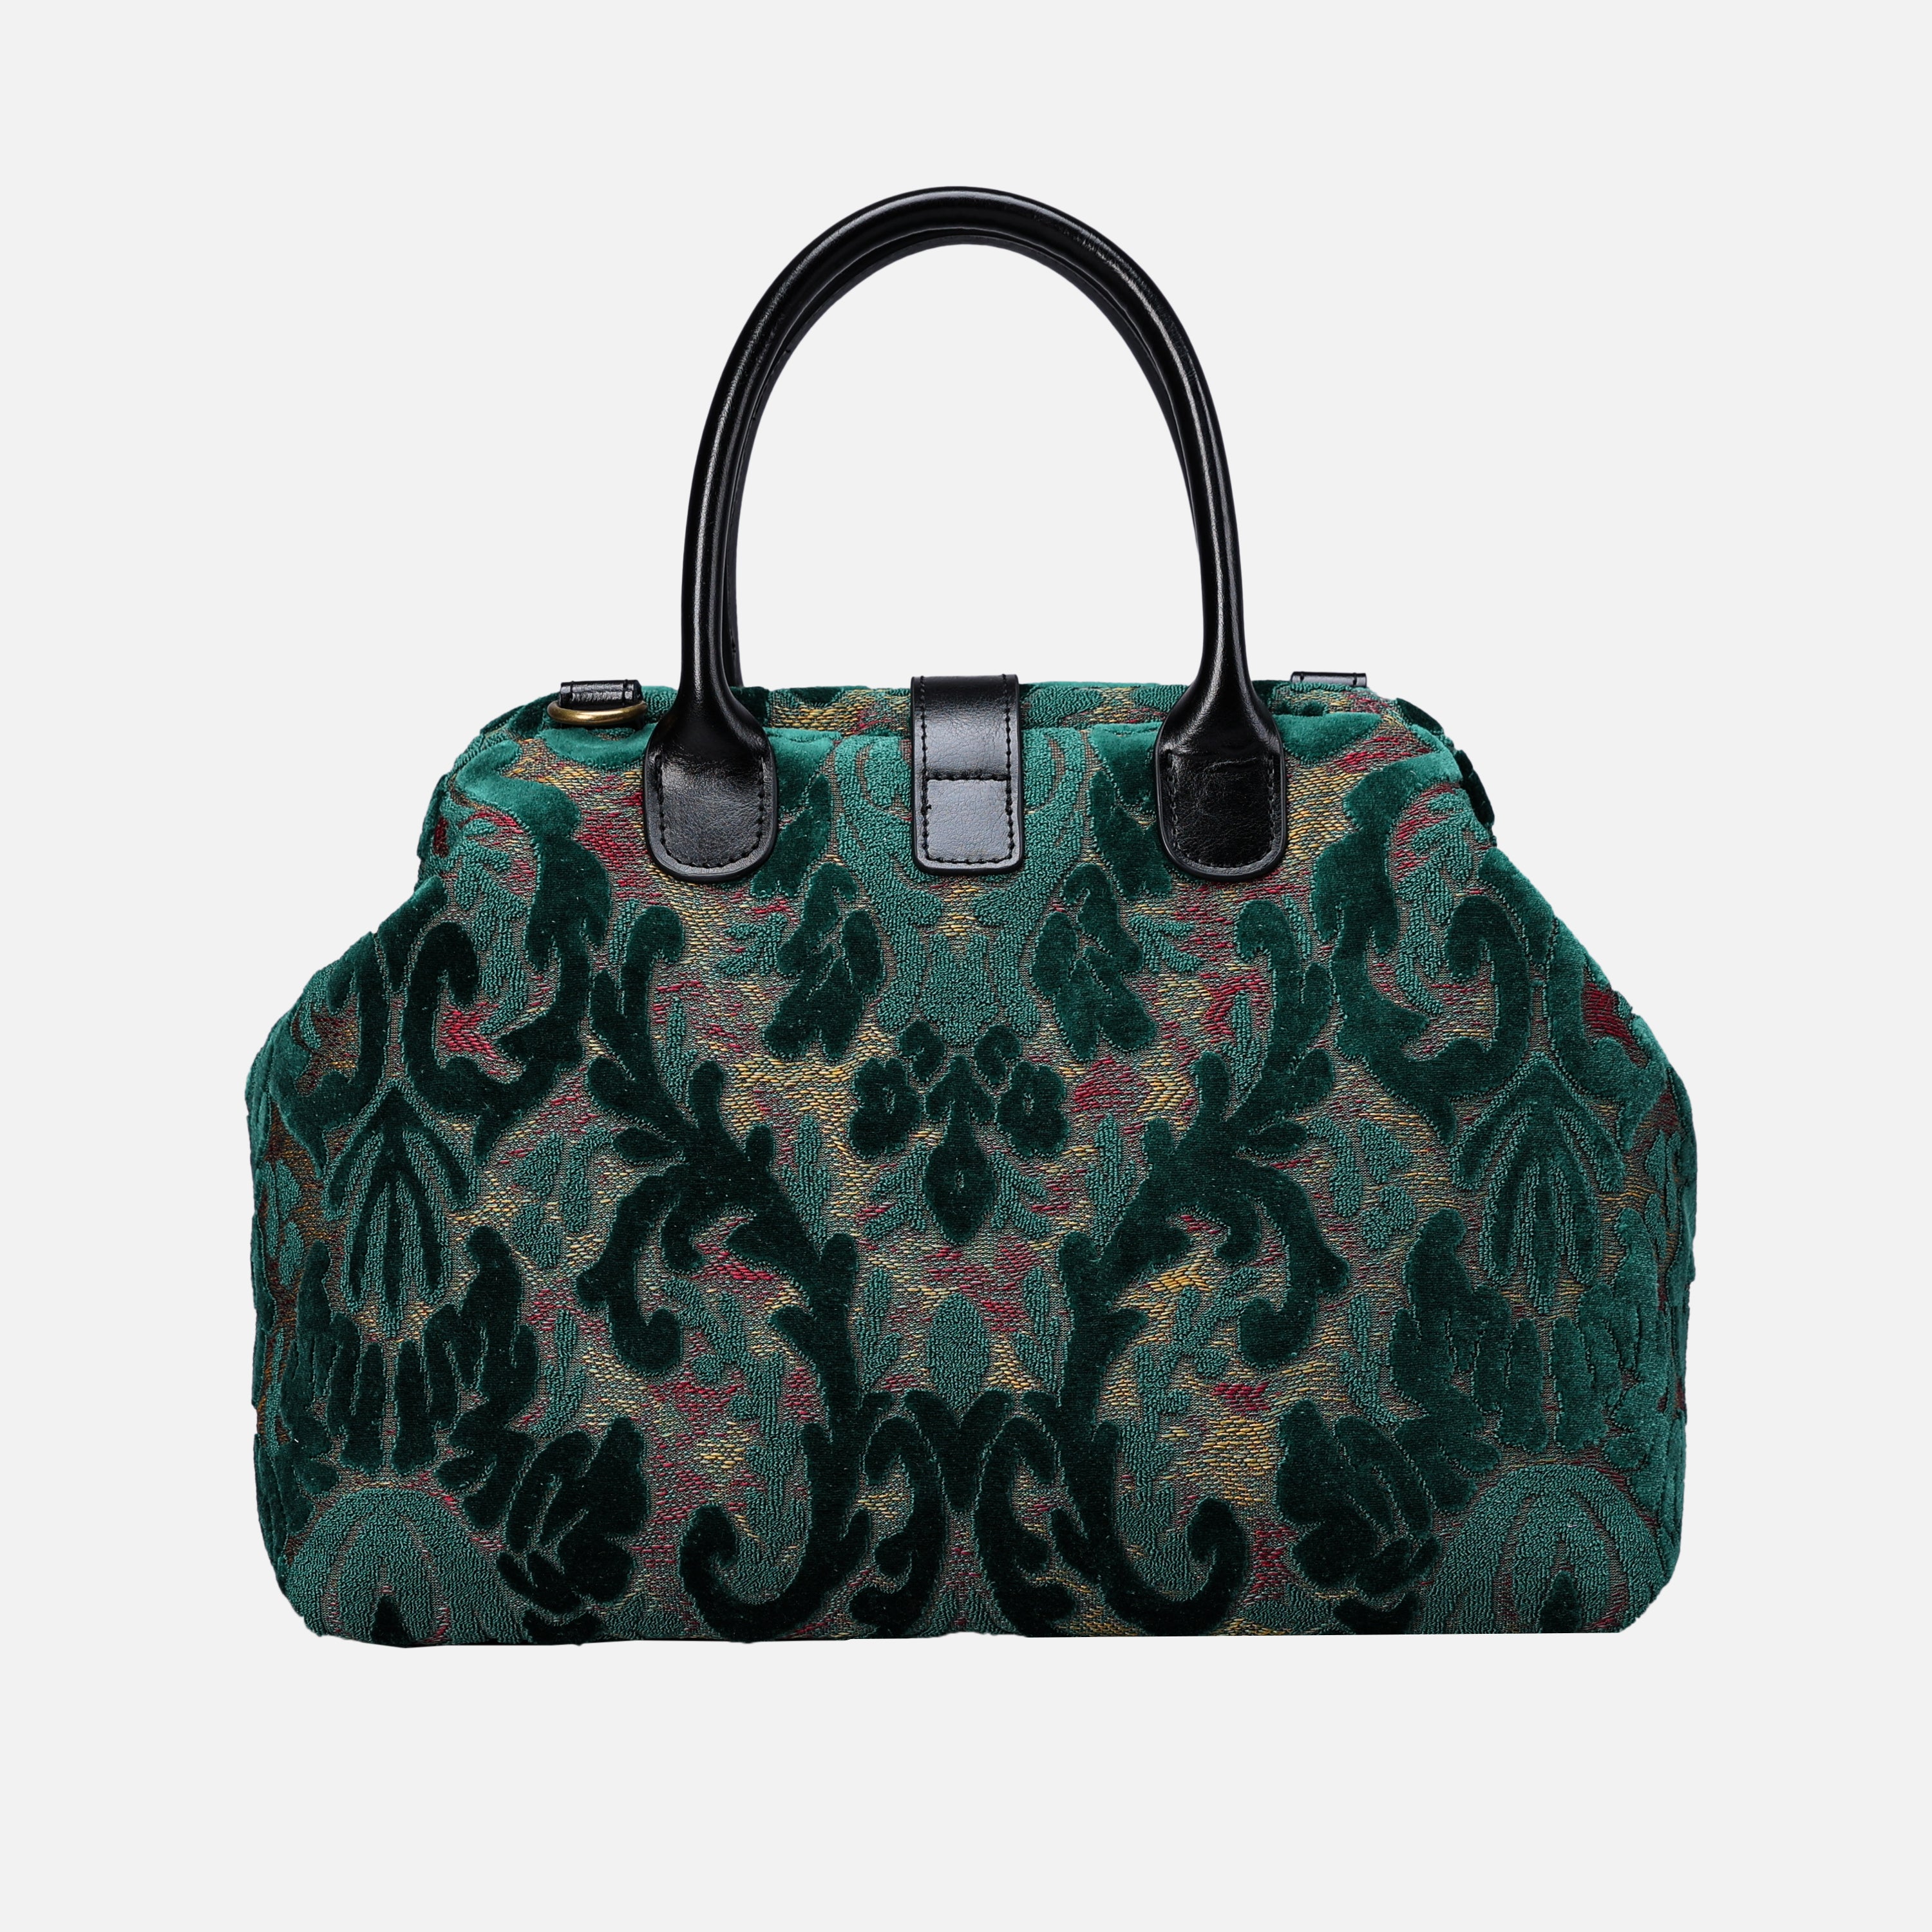 Burnout Velvet Jade Green Carpet Handbag Purse carpet bag MCW Handmade-3